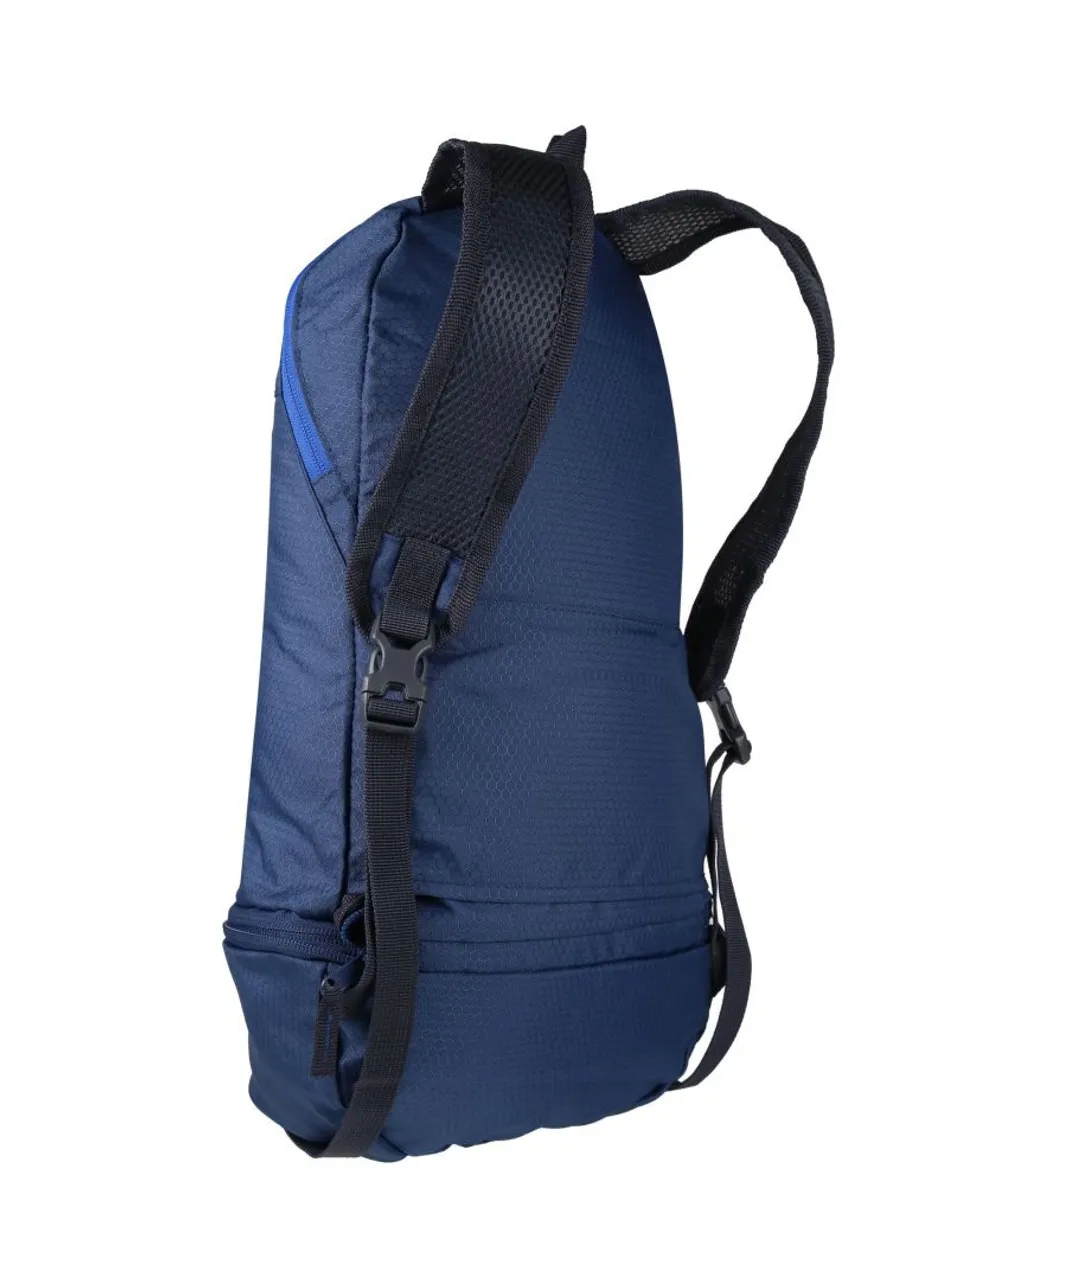 Regatta Unisex Packaway Hippack Backpack (Dark Denim/Nautical Blue) - Multicolour - One Size